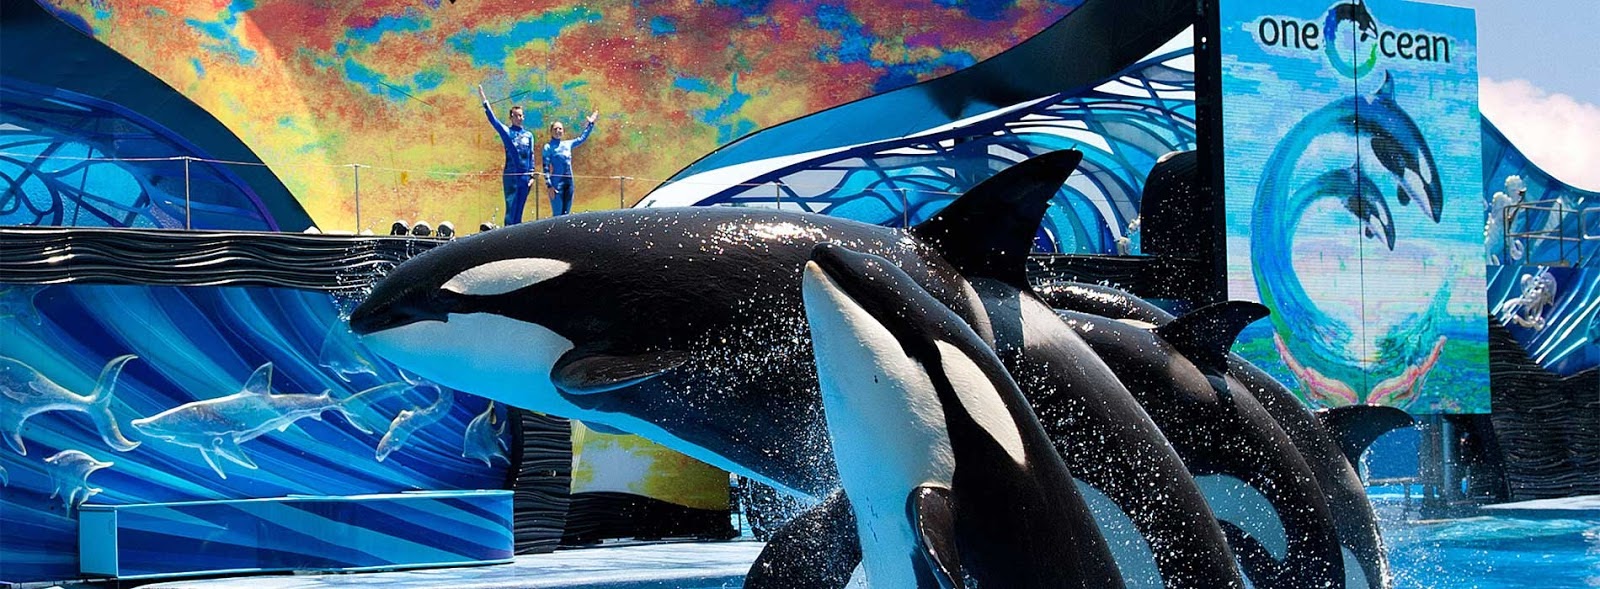 Seaworld Busch Gardens Temporarily Closing All Theme Parks